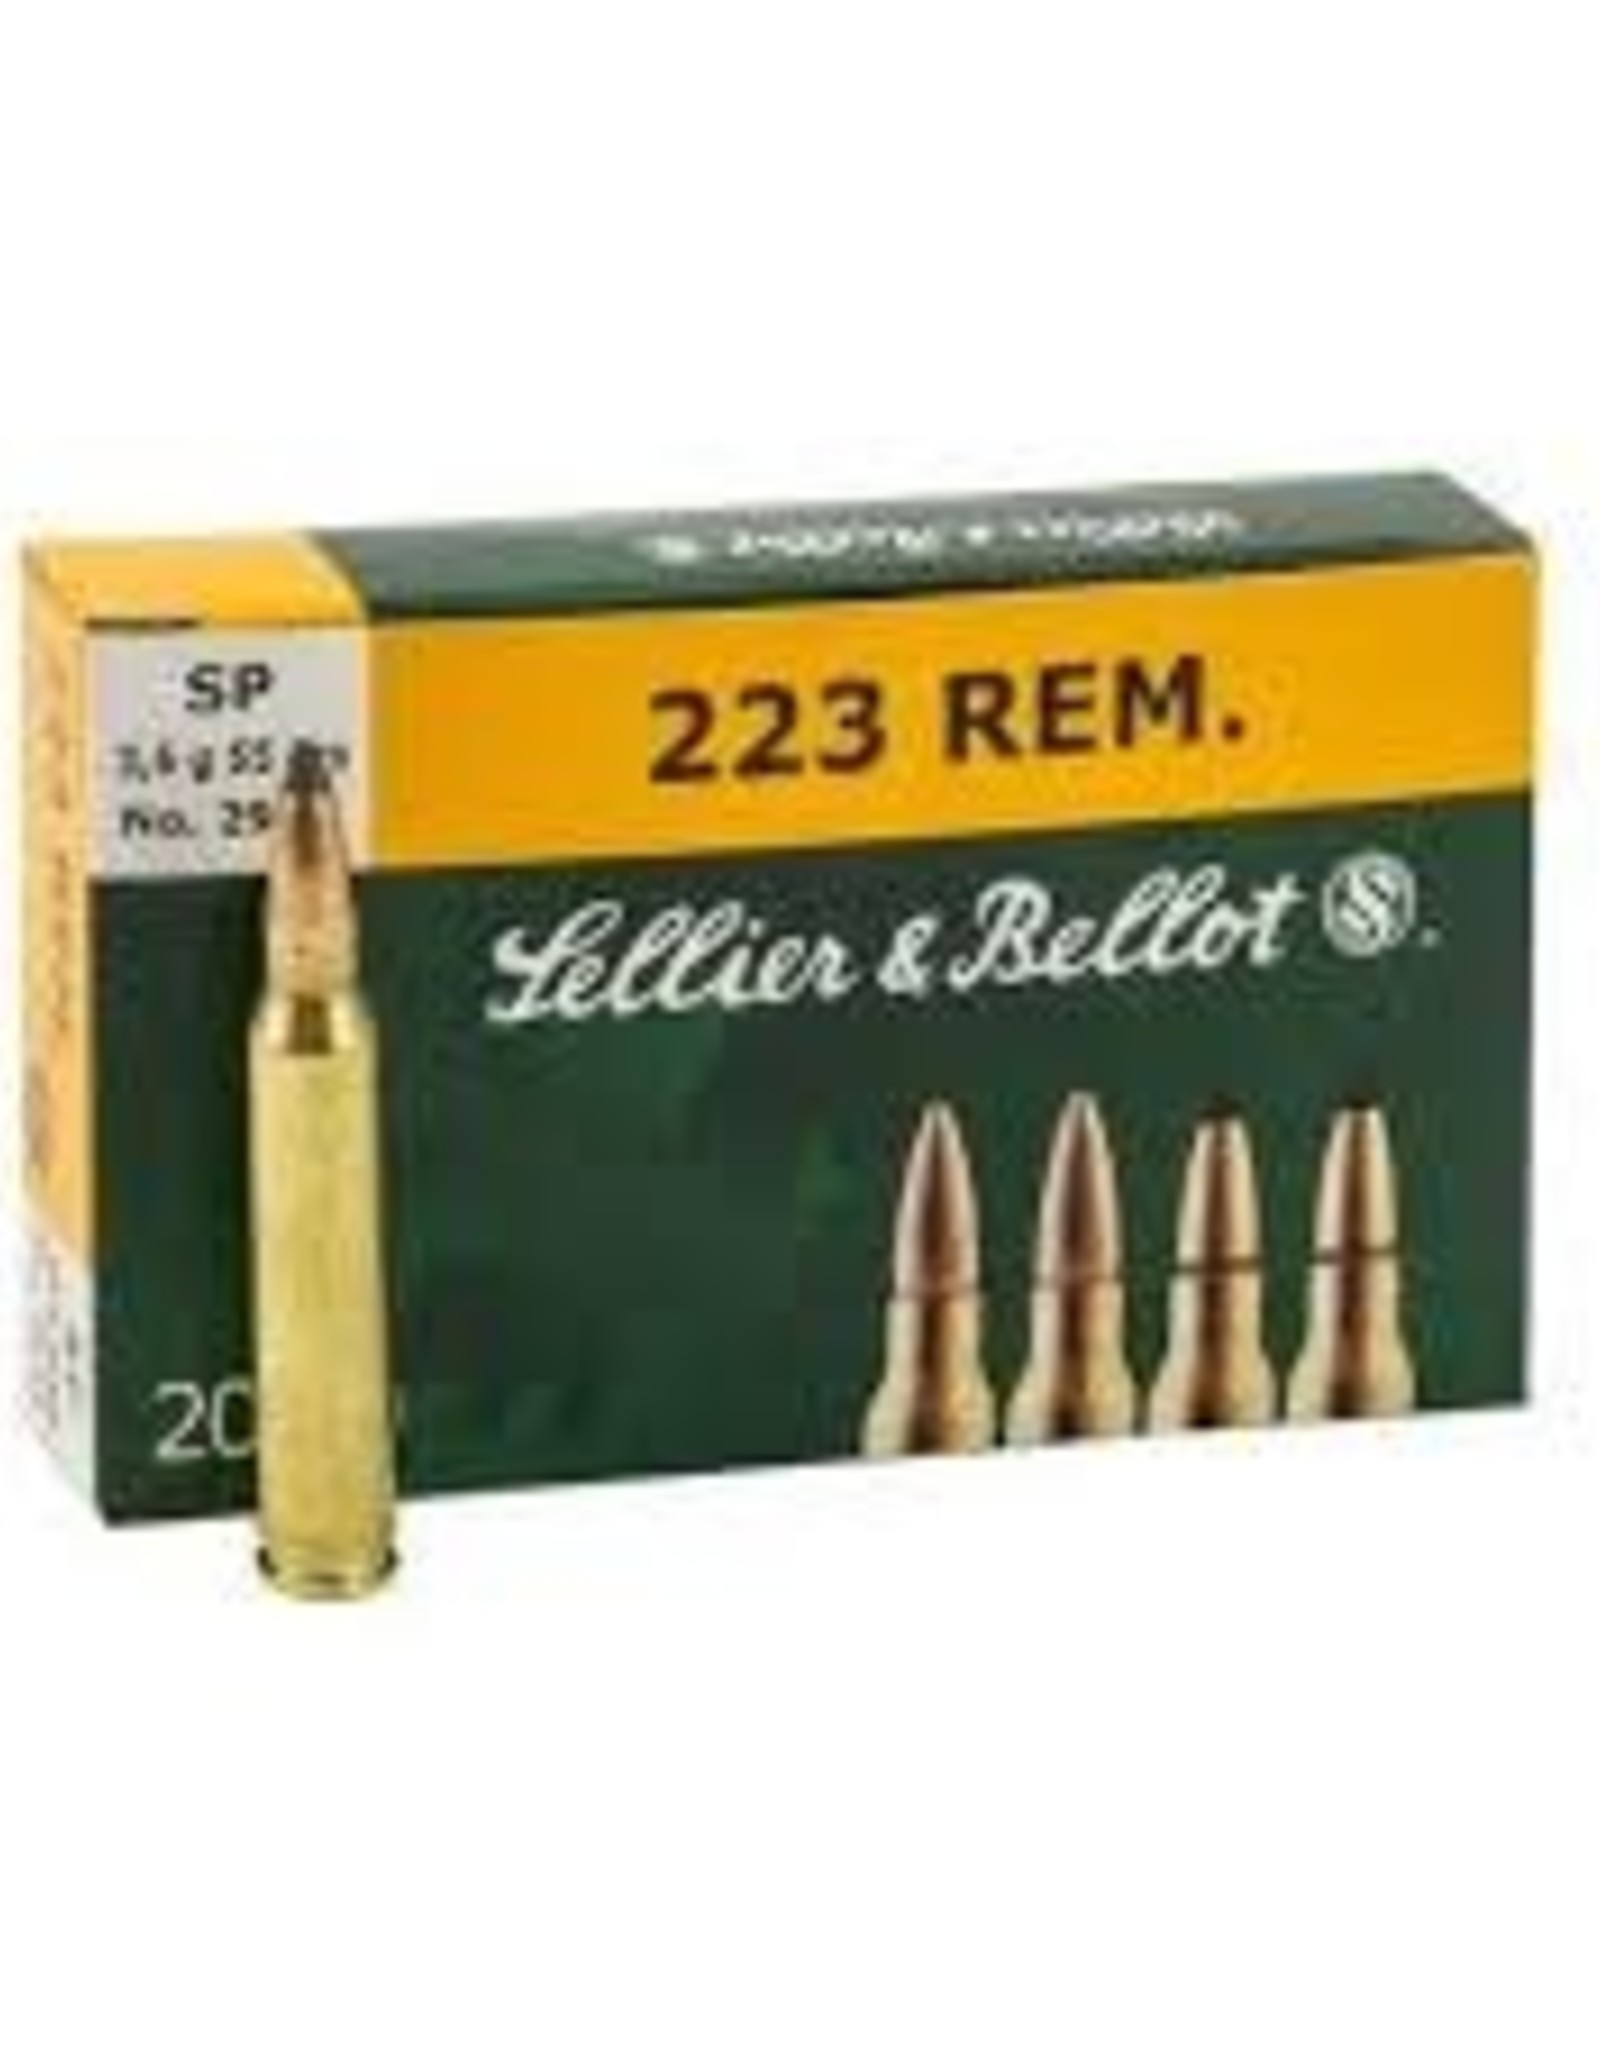 Remington 223 55 GR FMJ